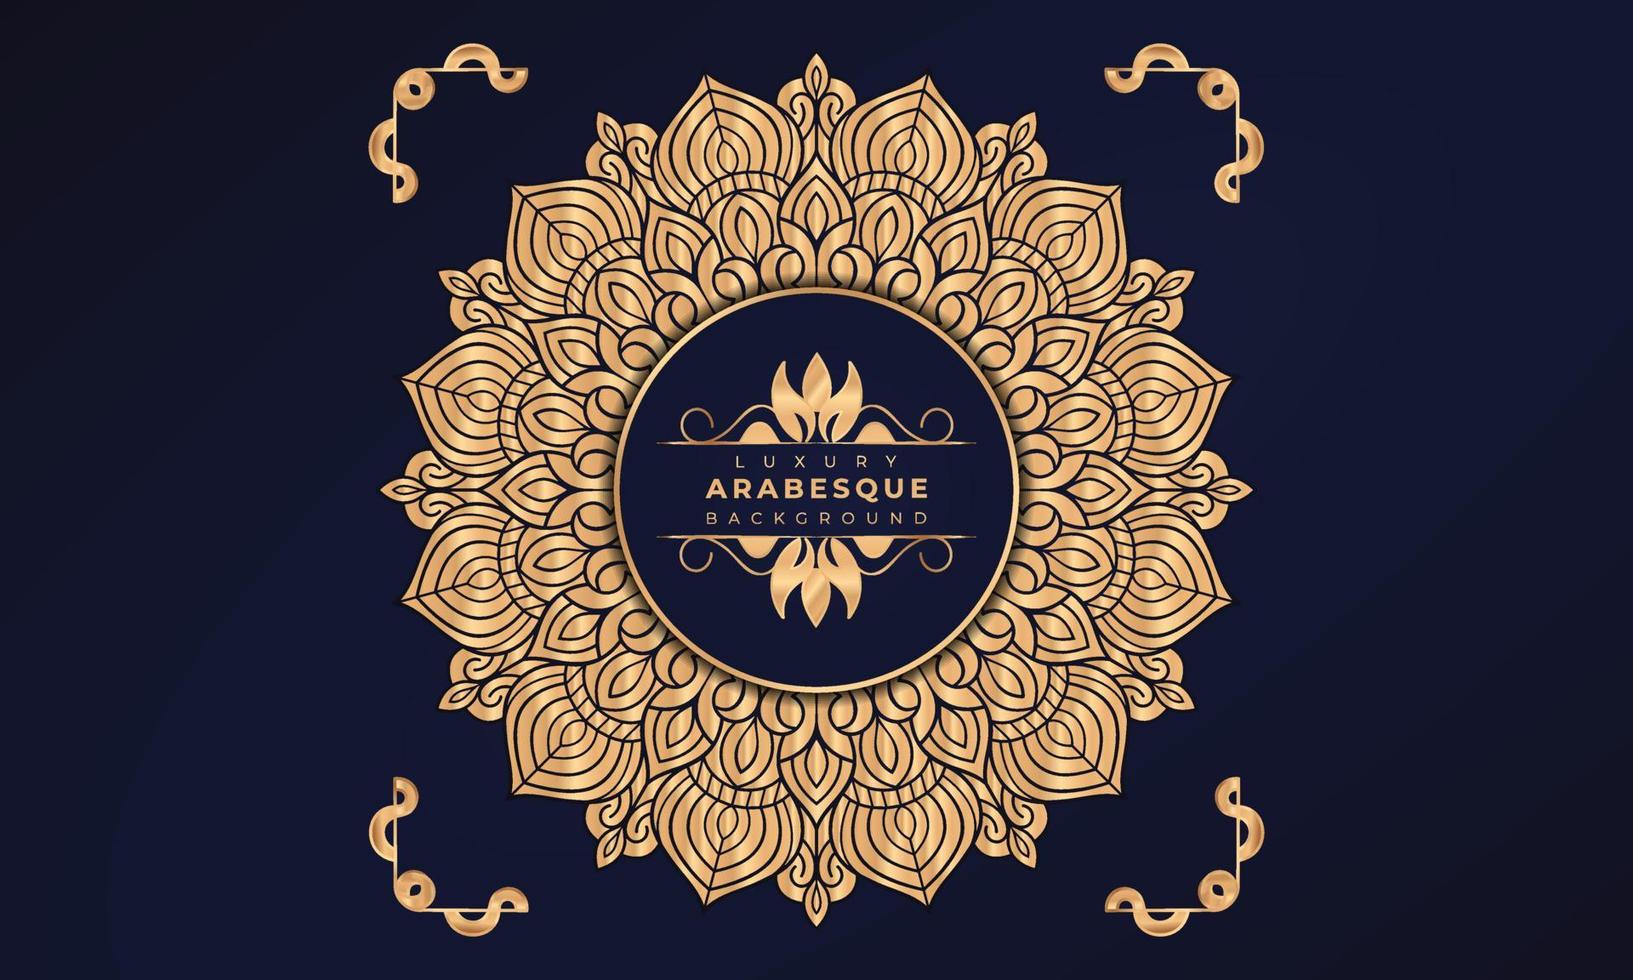 lyxig mandala bakgrundsdesign med gyllene arabeskmönster arabisk islamisk östlig stil. dekorativ mandala design för tryck, affisch, omslag, broschyr, flygblad, banner. vektor